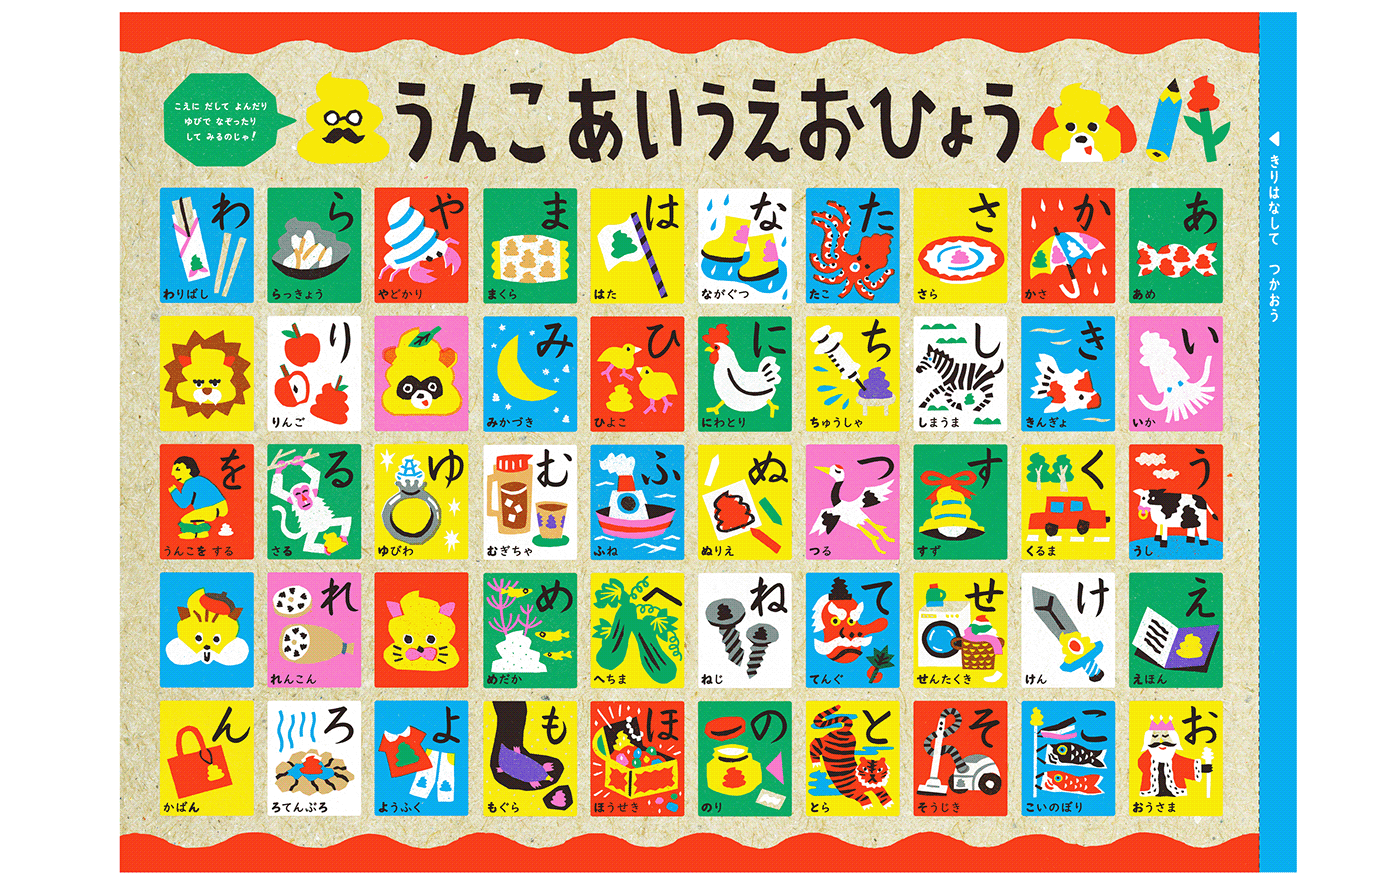 alphabet book chart children's book Hiragana japanese kids learning Playful poster